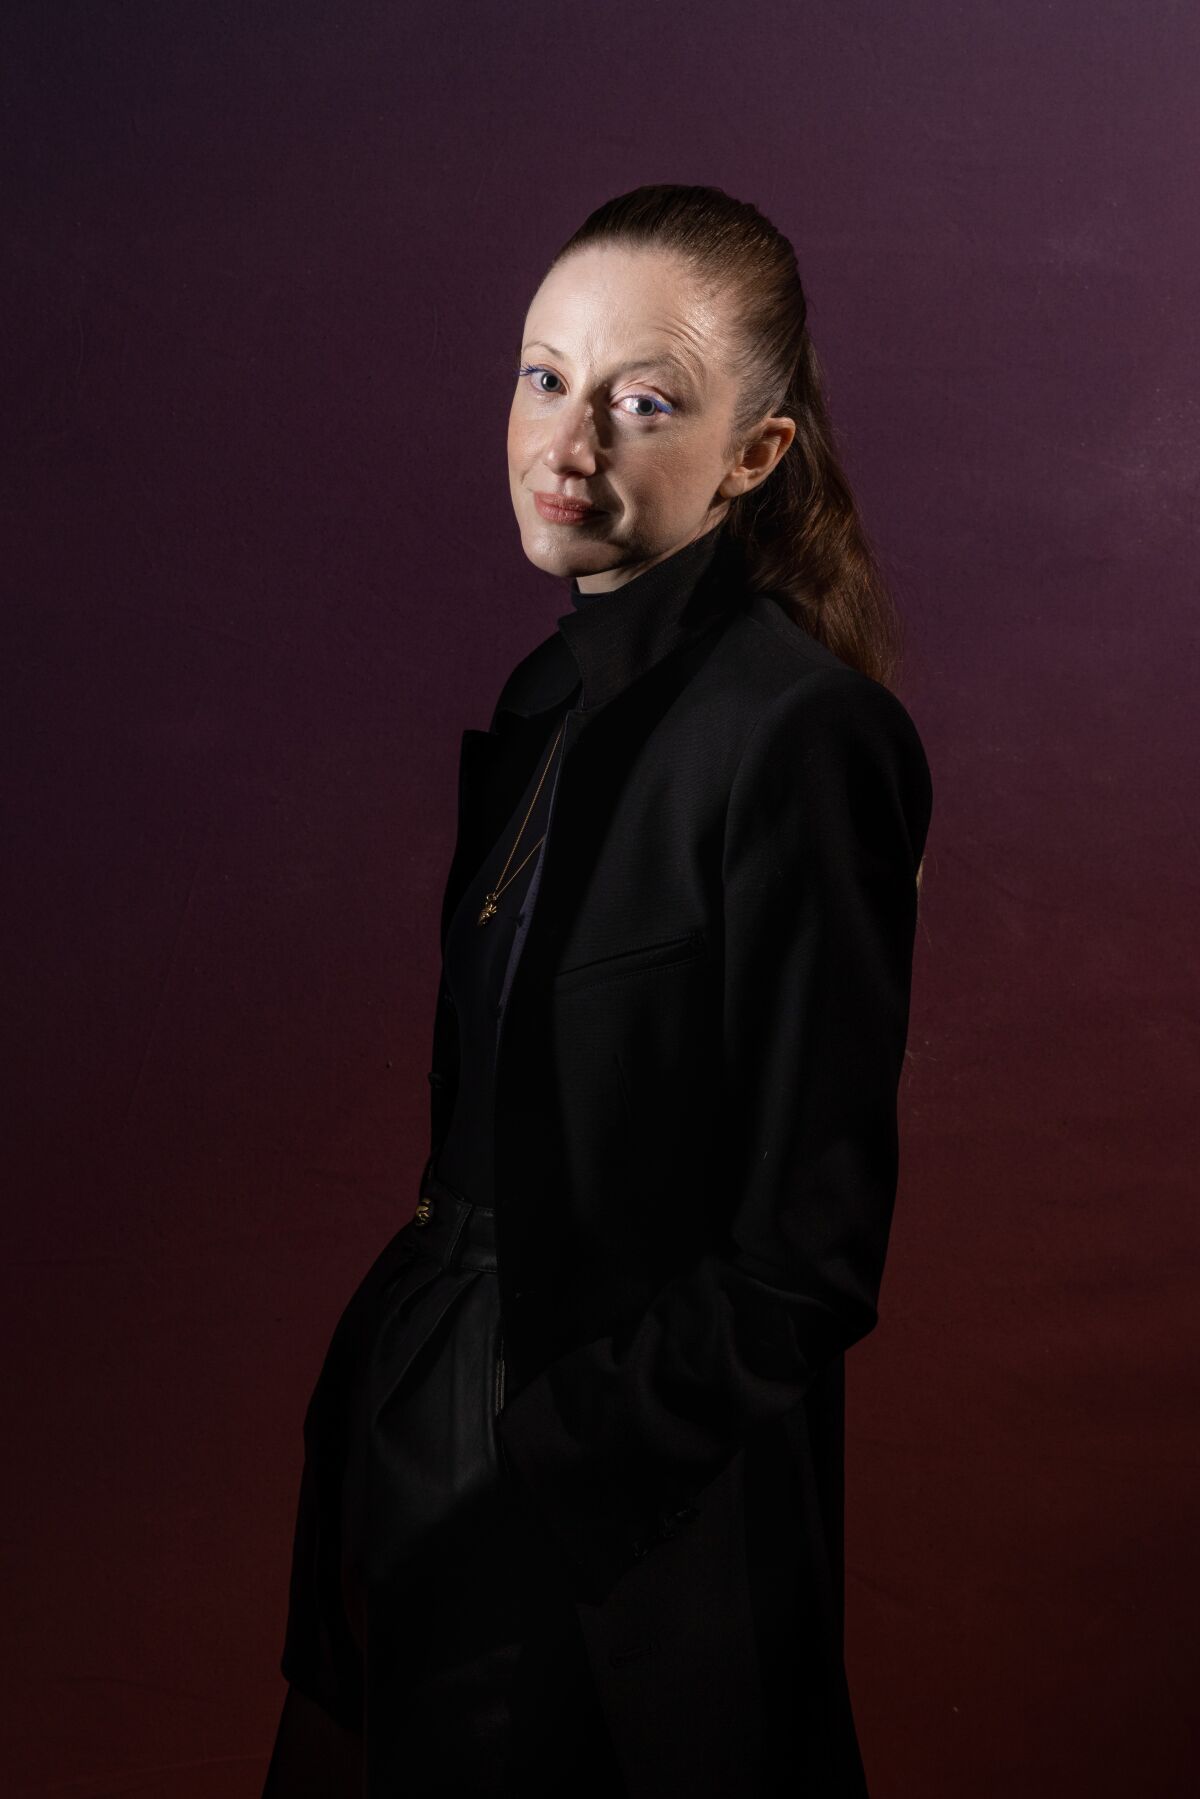 Andrea Riseborough wears all black for a portrait.